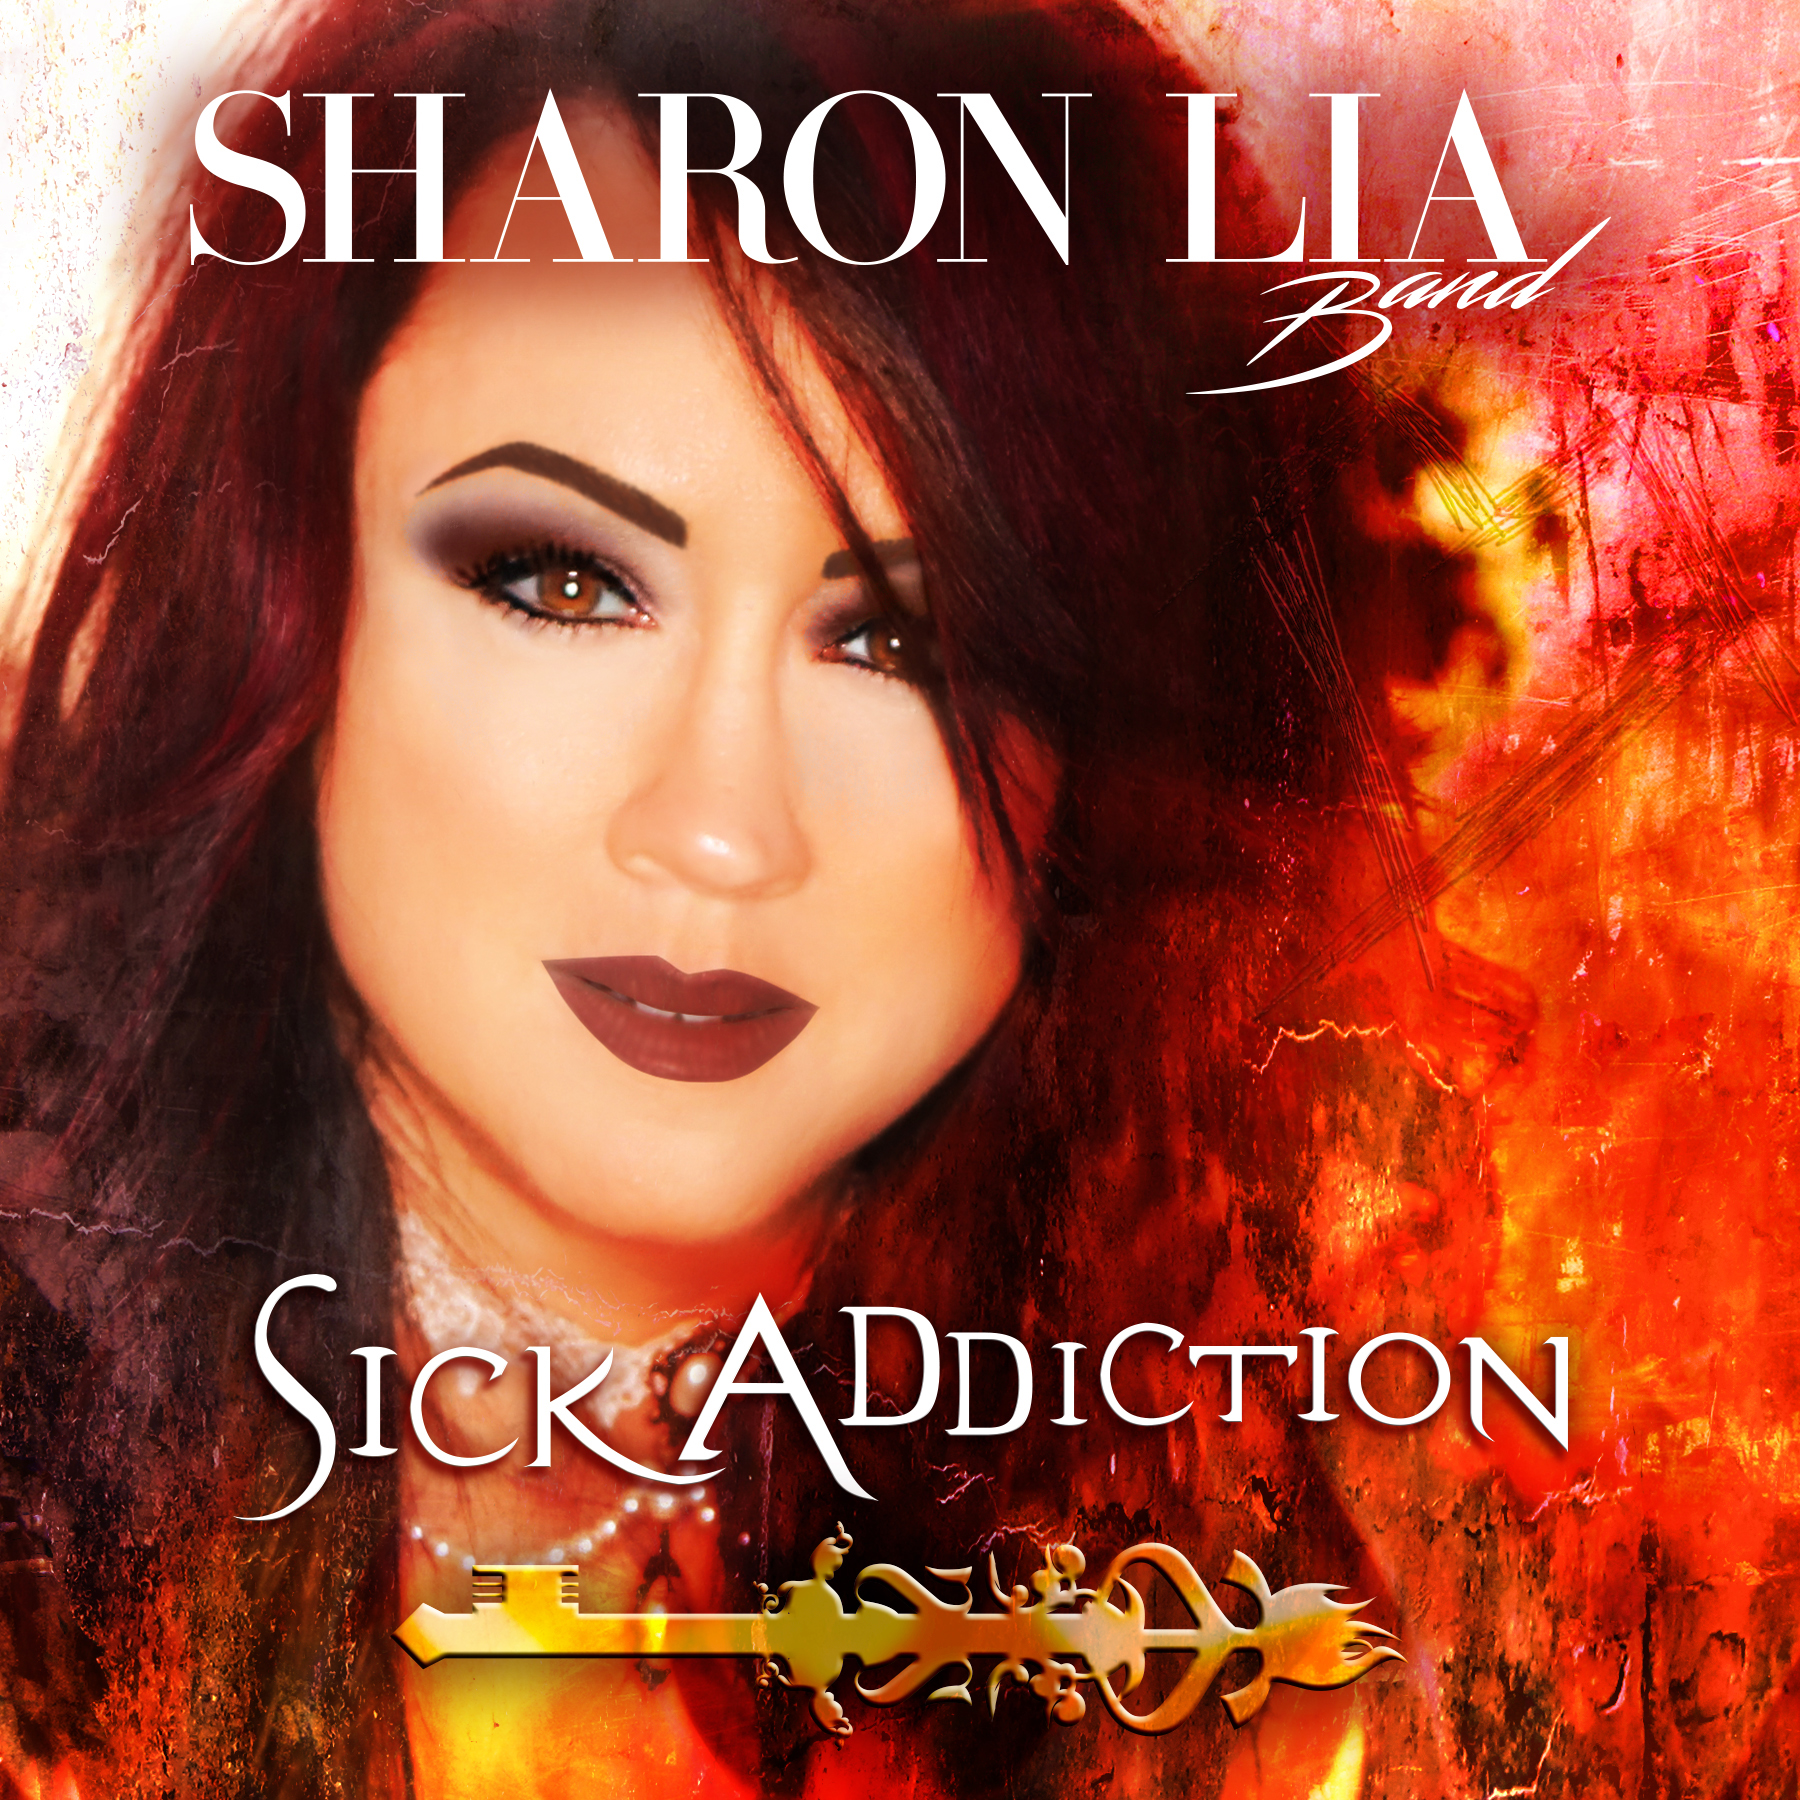 Sick Addiction single artwork Sharon Lia Band